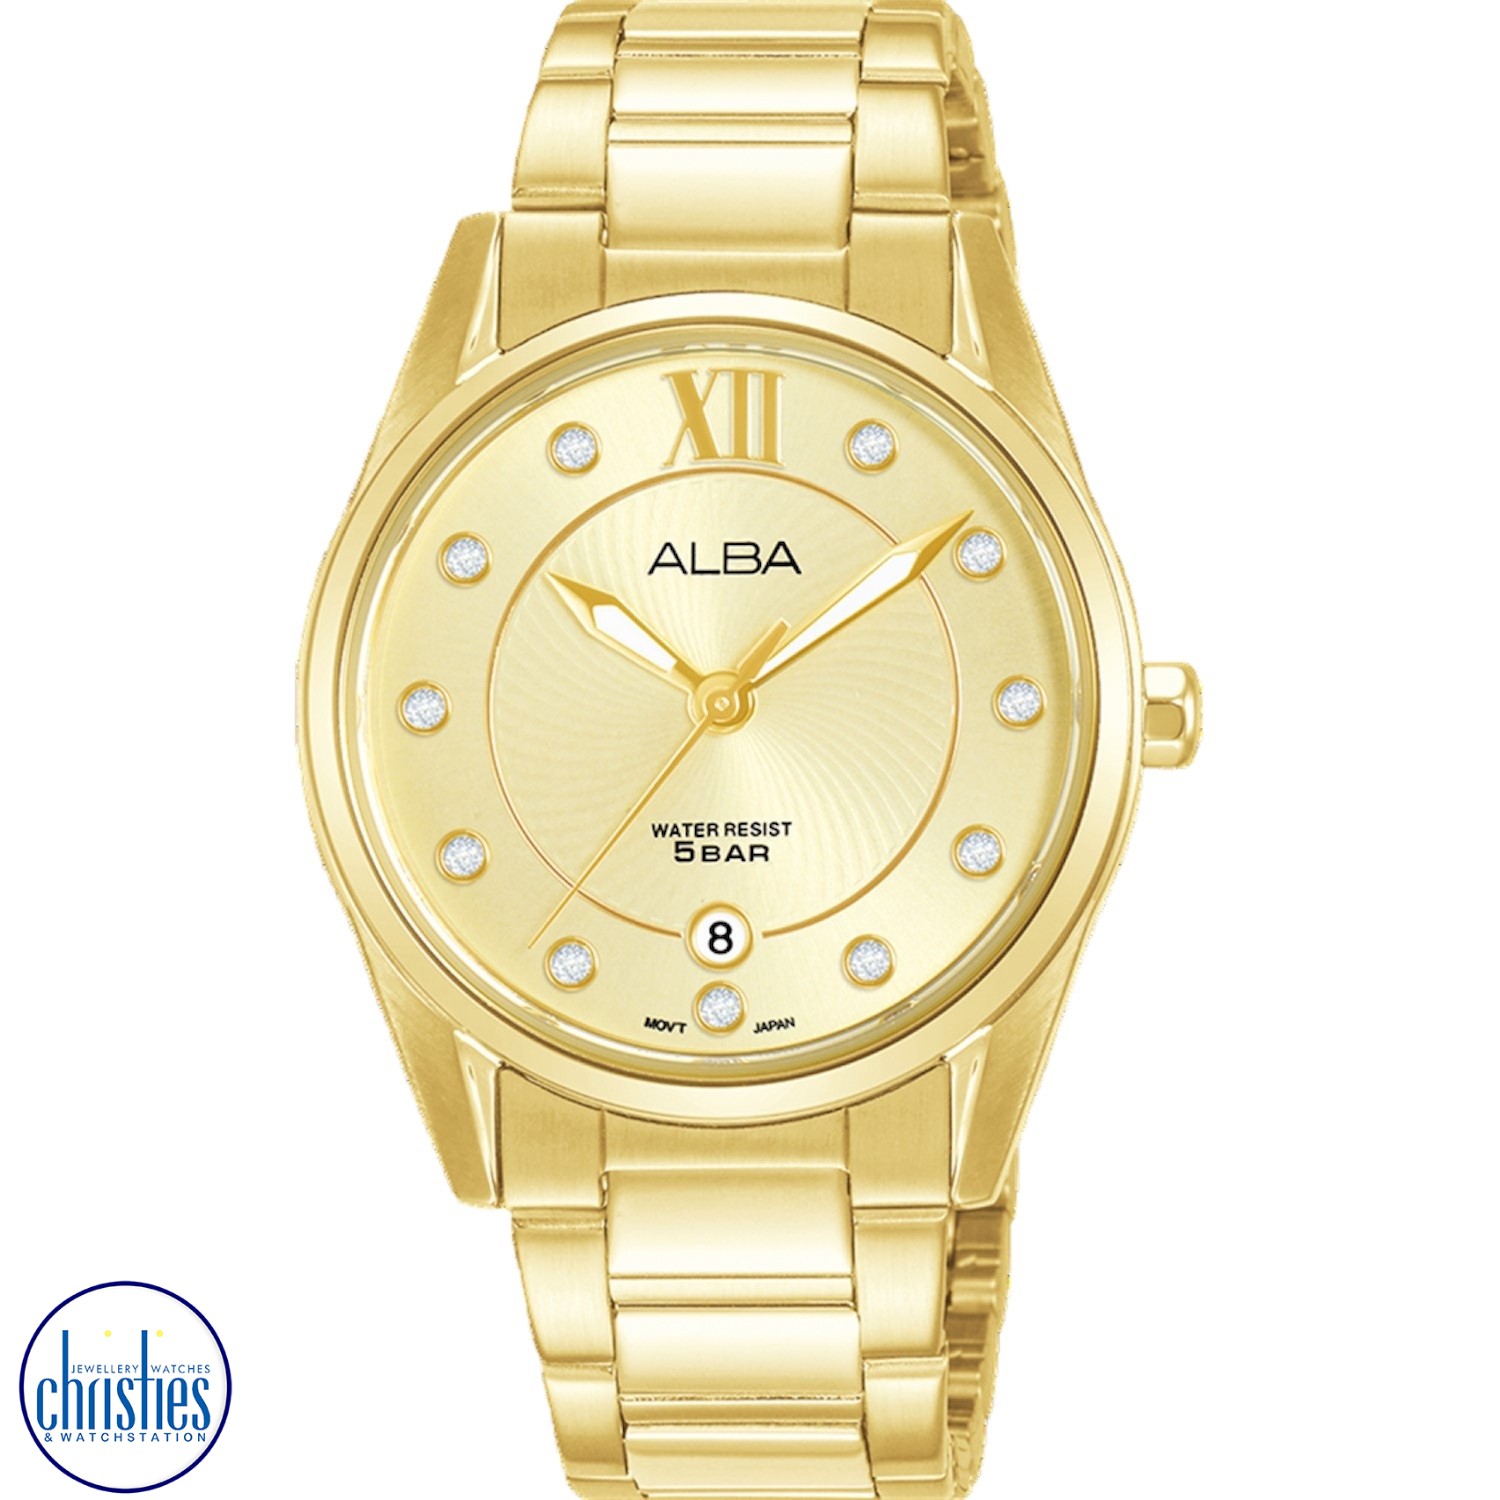 AG8M60X  ALBA Prestige Watch ALBA watch original price